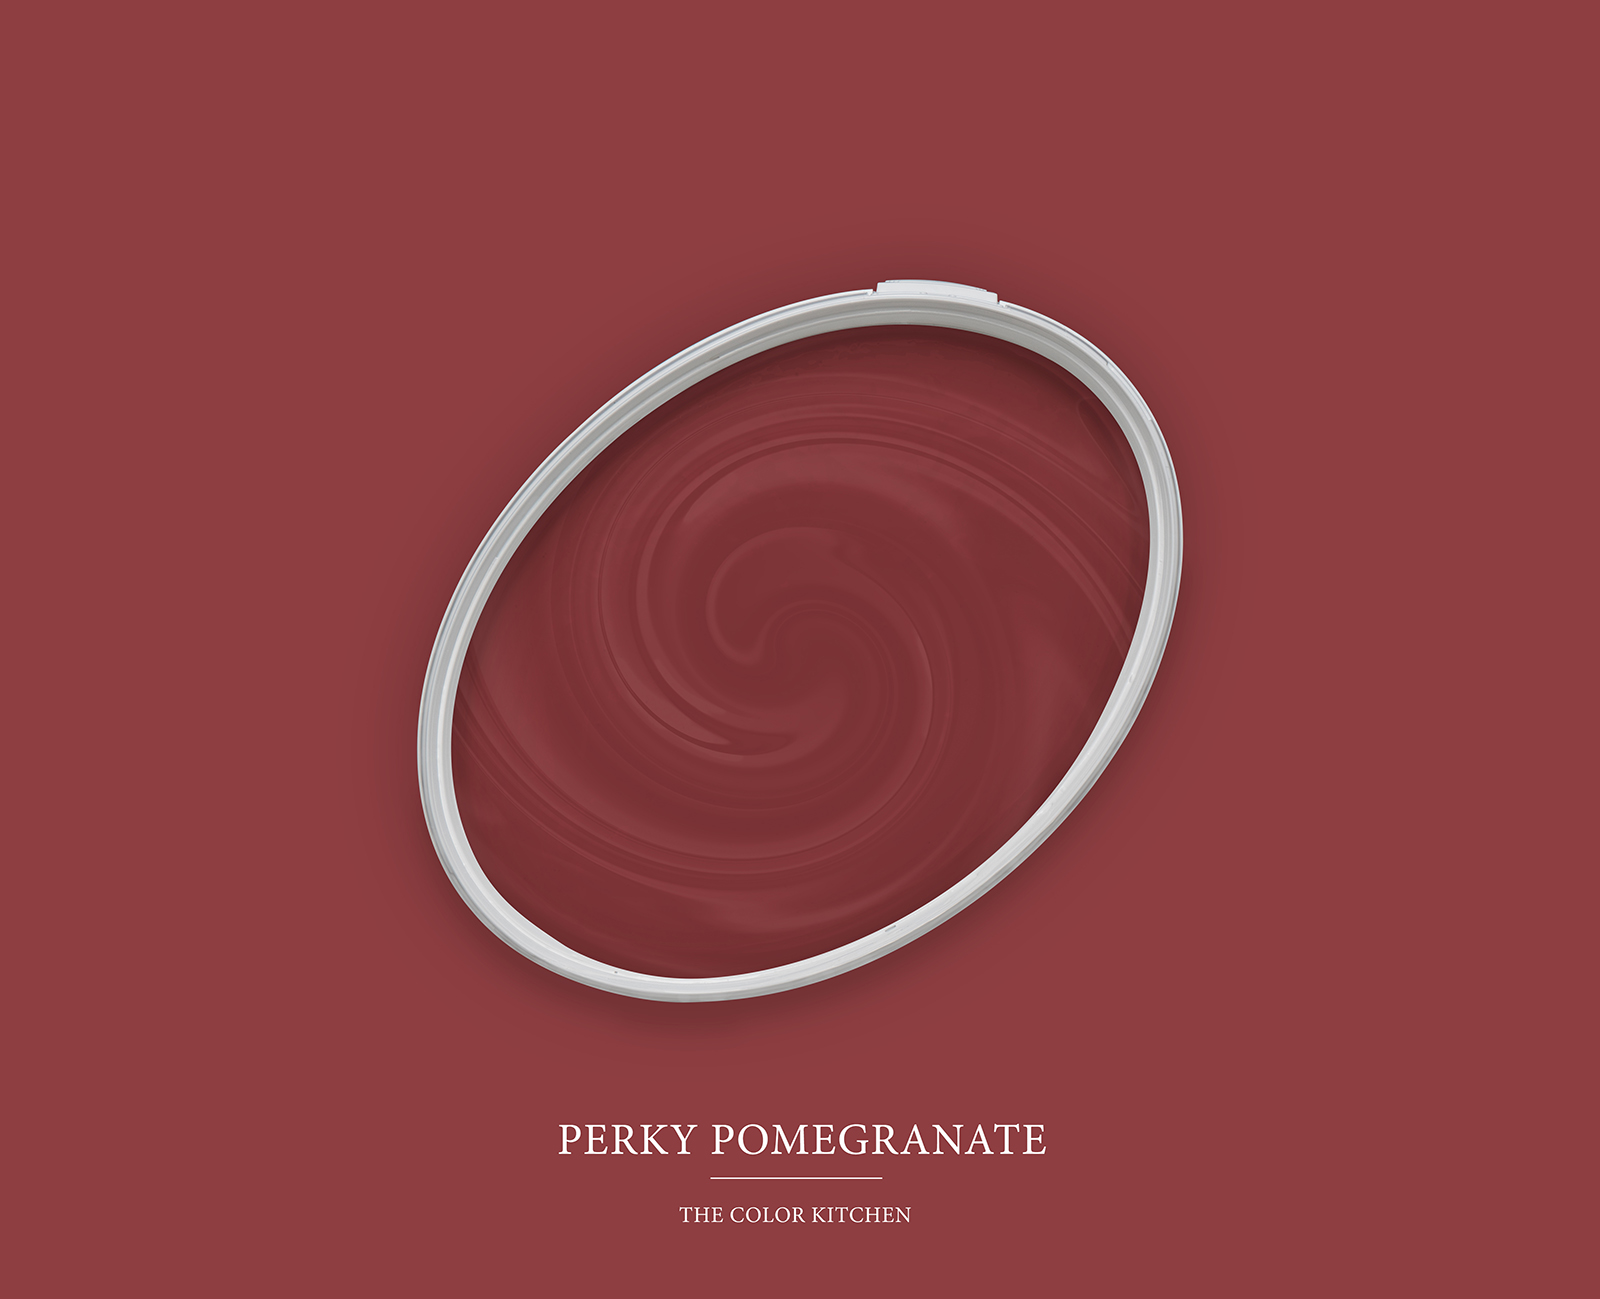 Muurverf TCK7006 »Perky Pomegranate« in passioneel donkerrood – 5,0 liter
